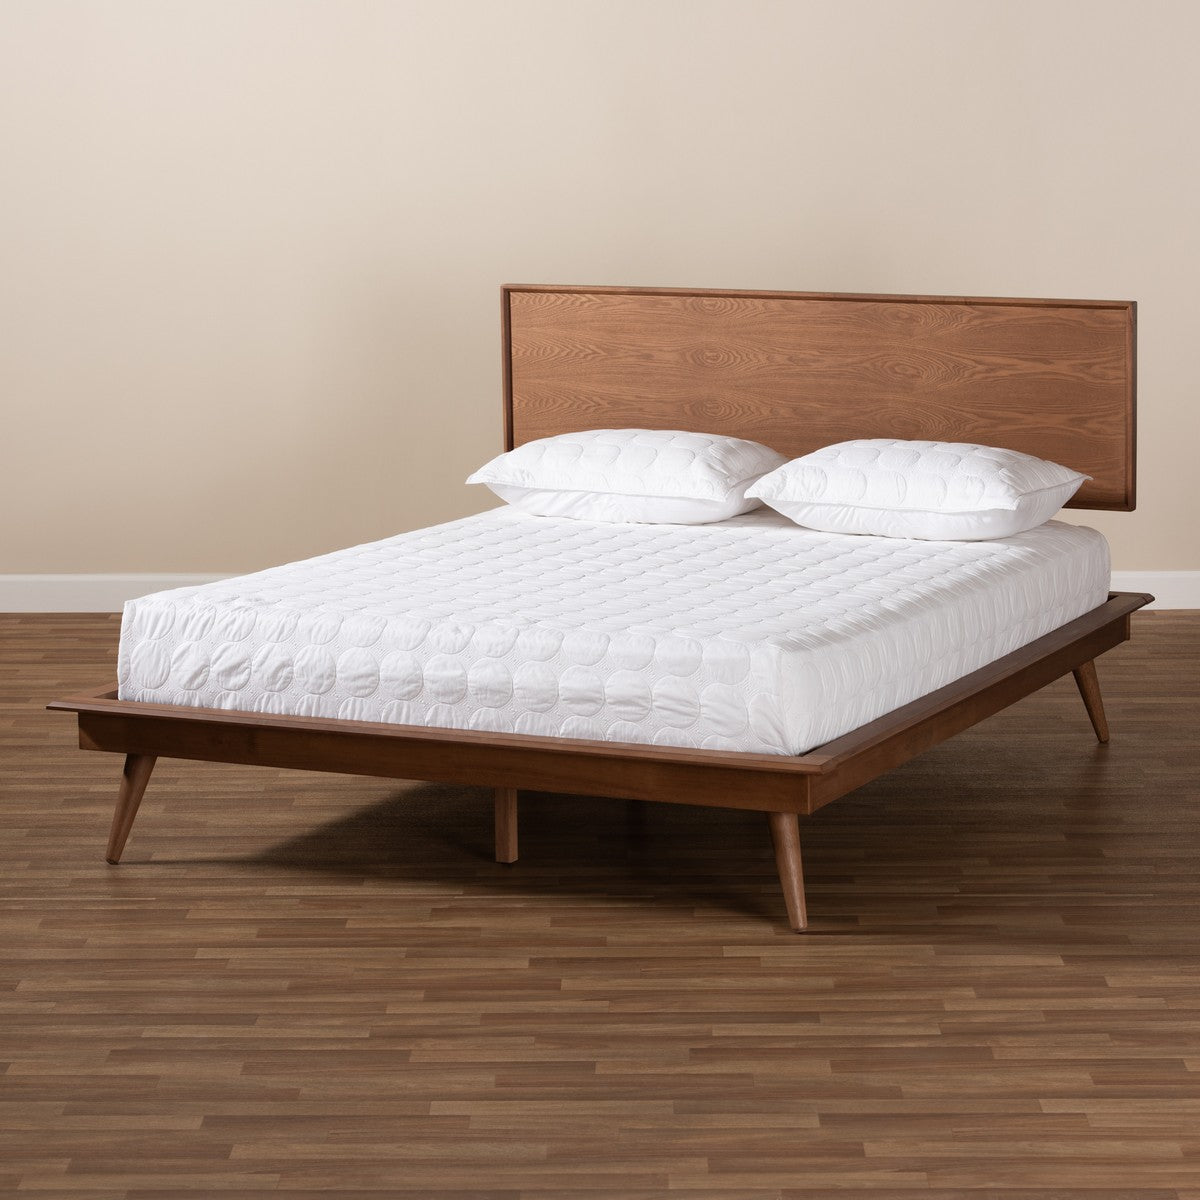 Baxton Studio Karine Mid-Century Modern Walnut Brown Finished Wood Full Size Platform Bed